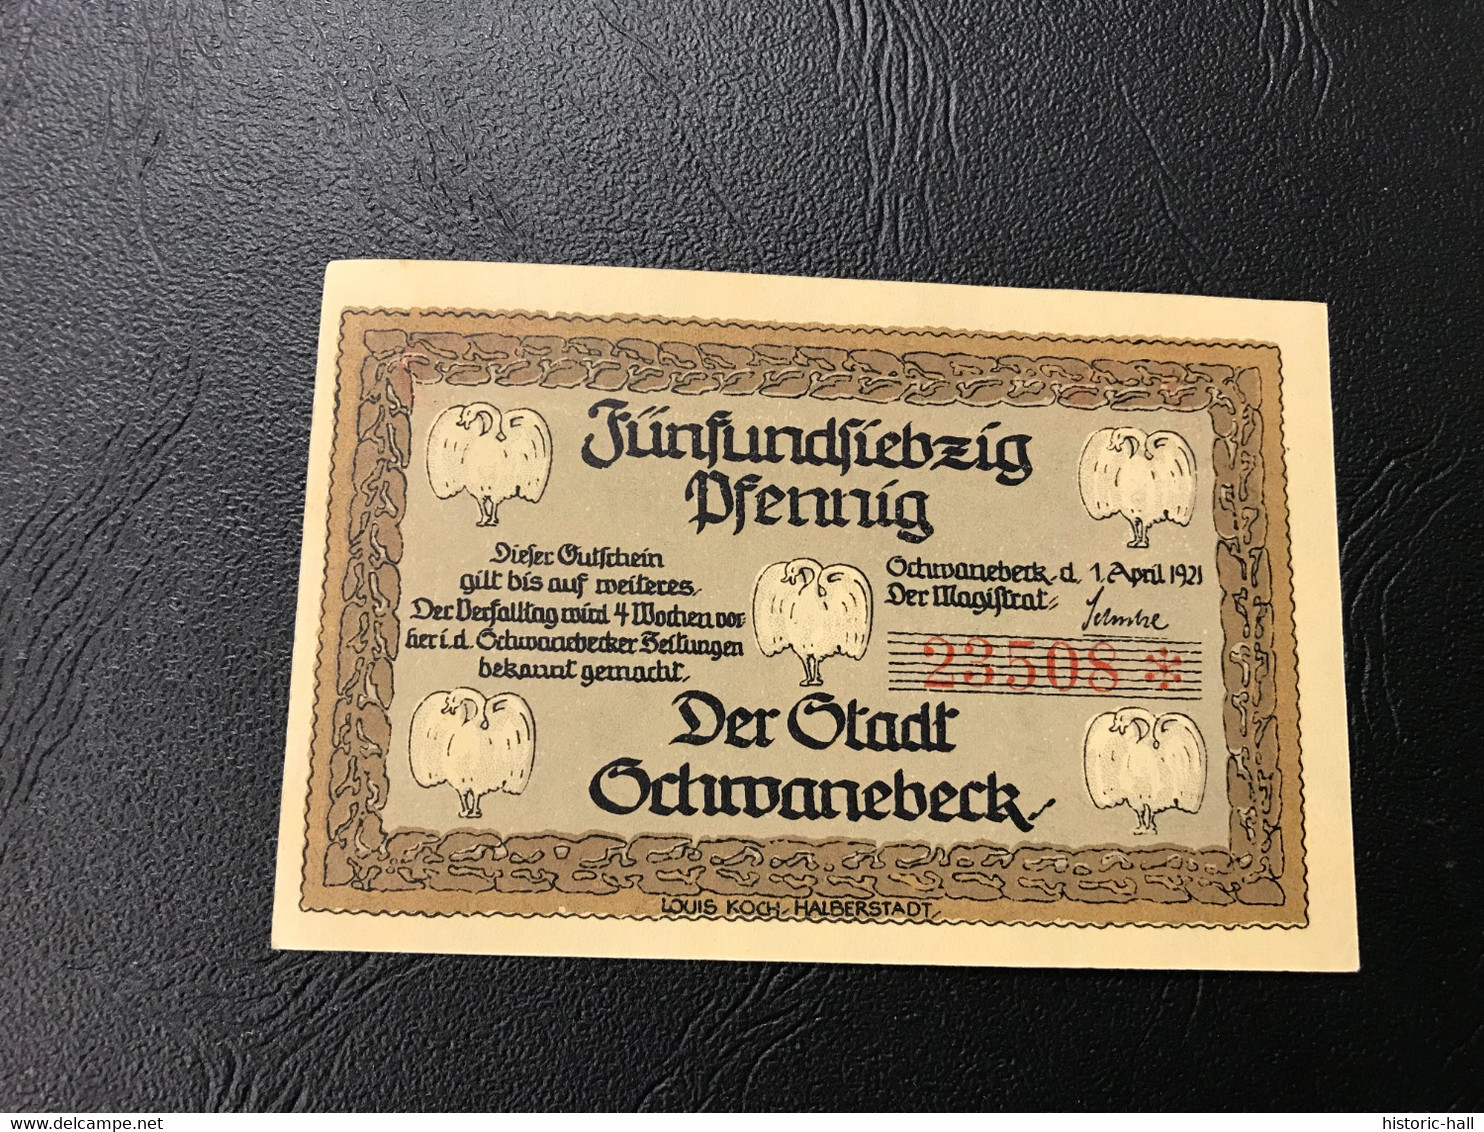 Notgeld - Billet Necéssité Allemagne - 75 Pfennig - Schwanebeck - 1 Avril 1921 - Non Classés